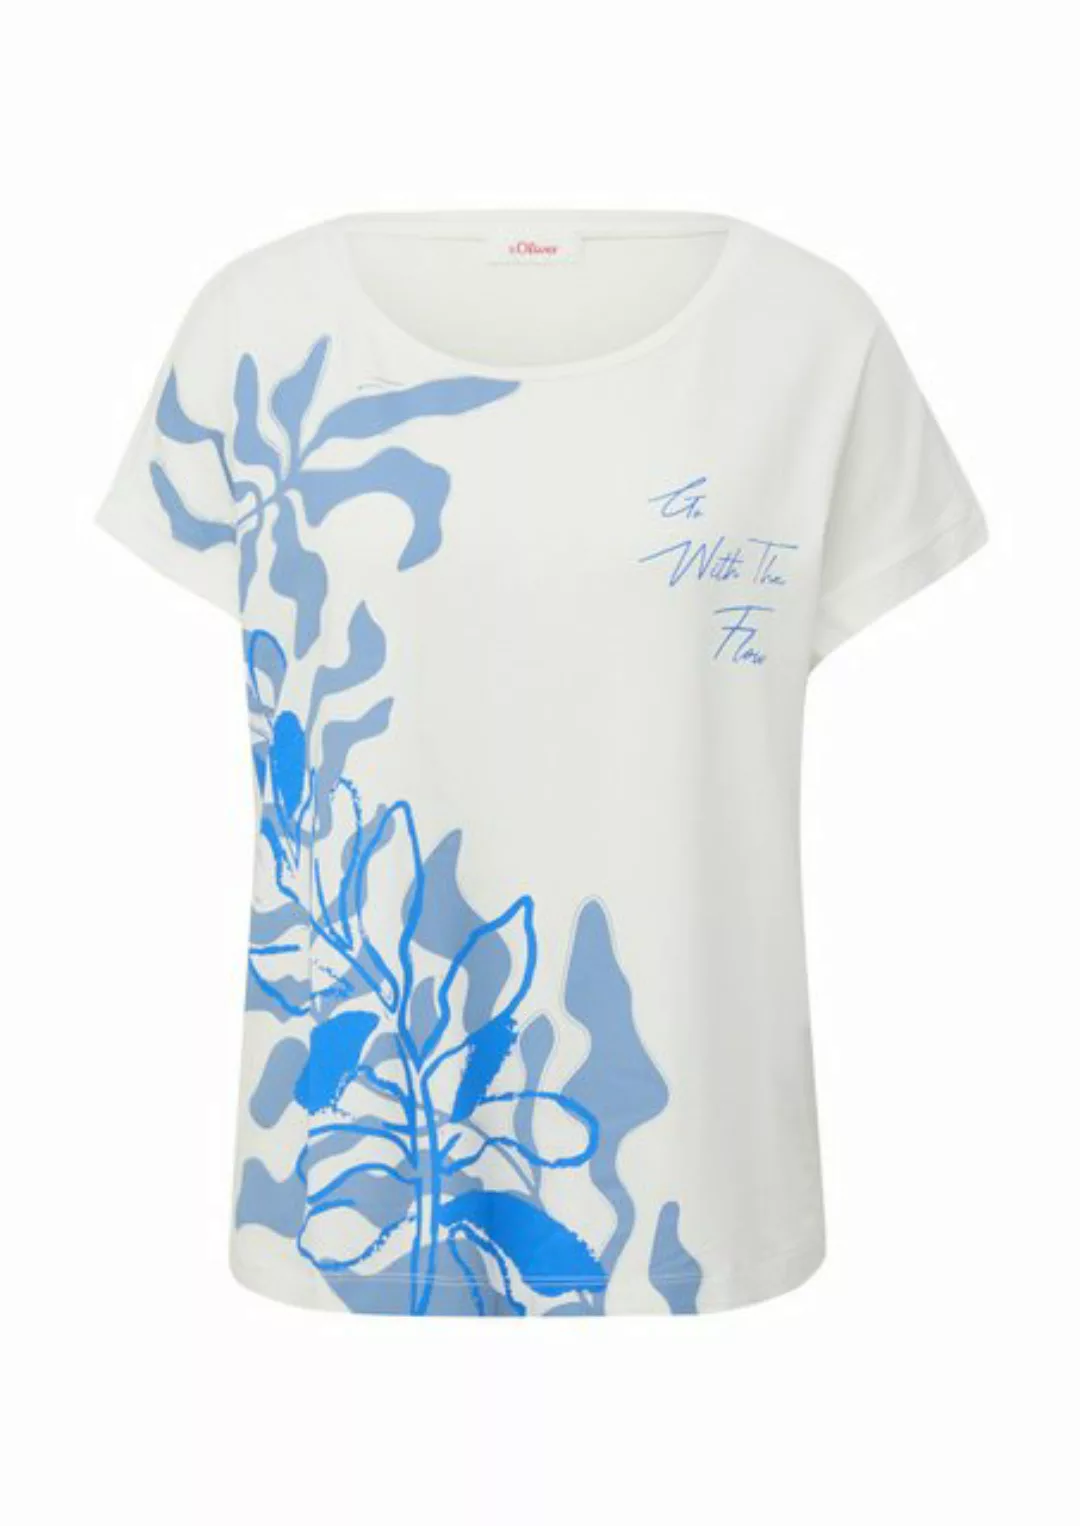 s.Oliver Print-Shirt mit großem Floral-Print günstig online kaufen